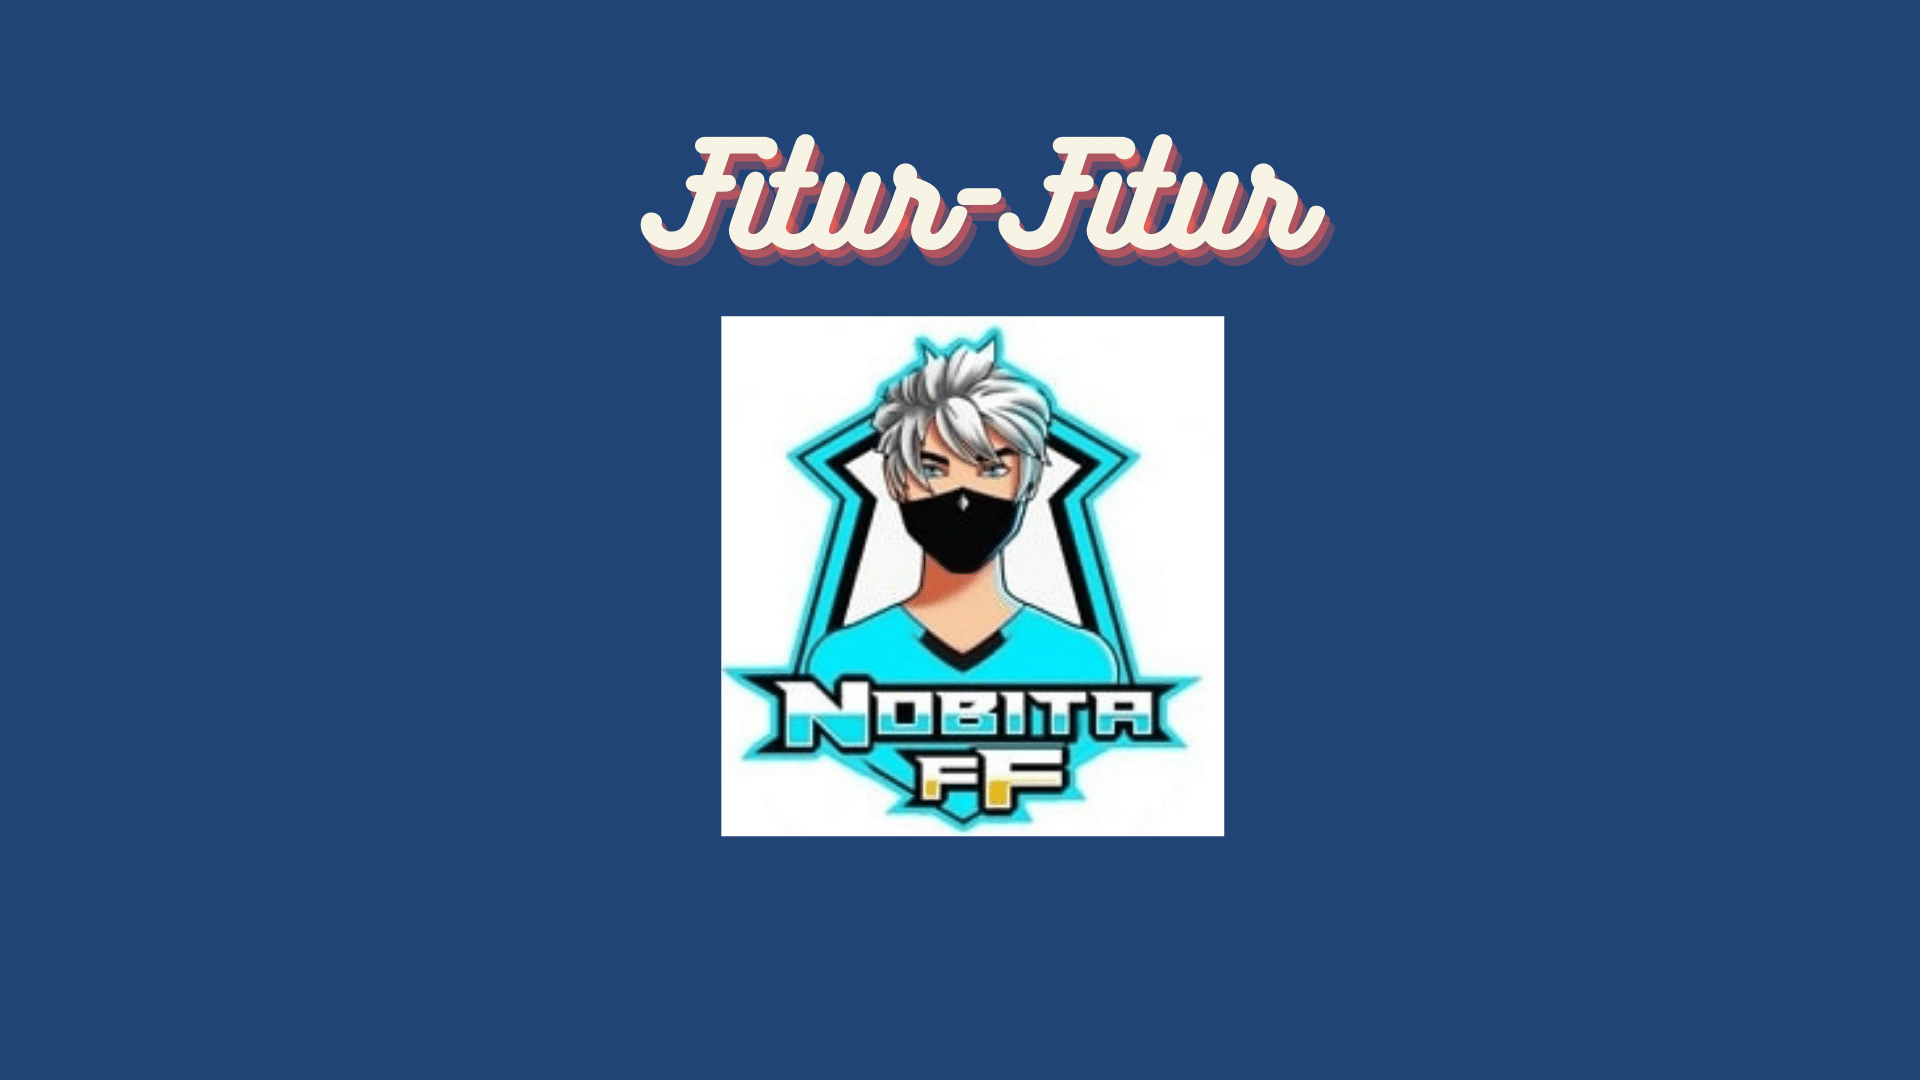 VIP nobita FF mod apk